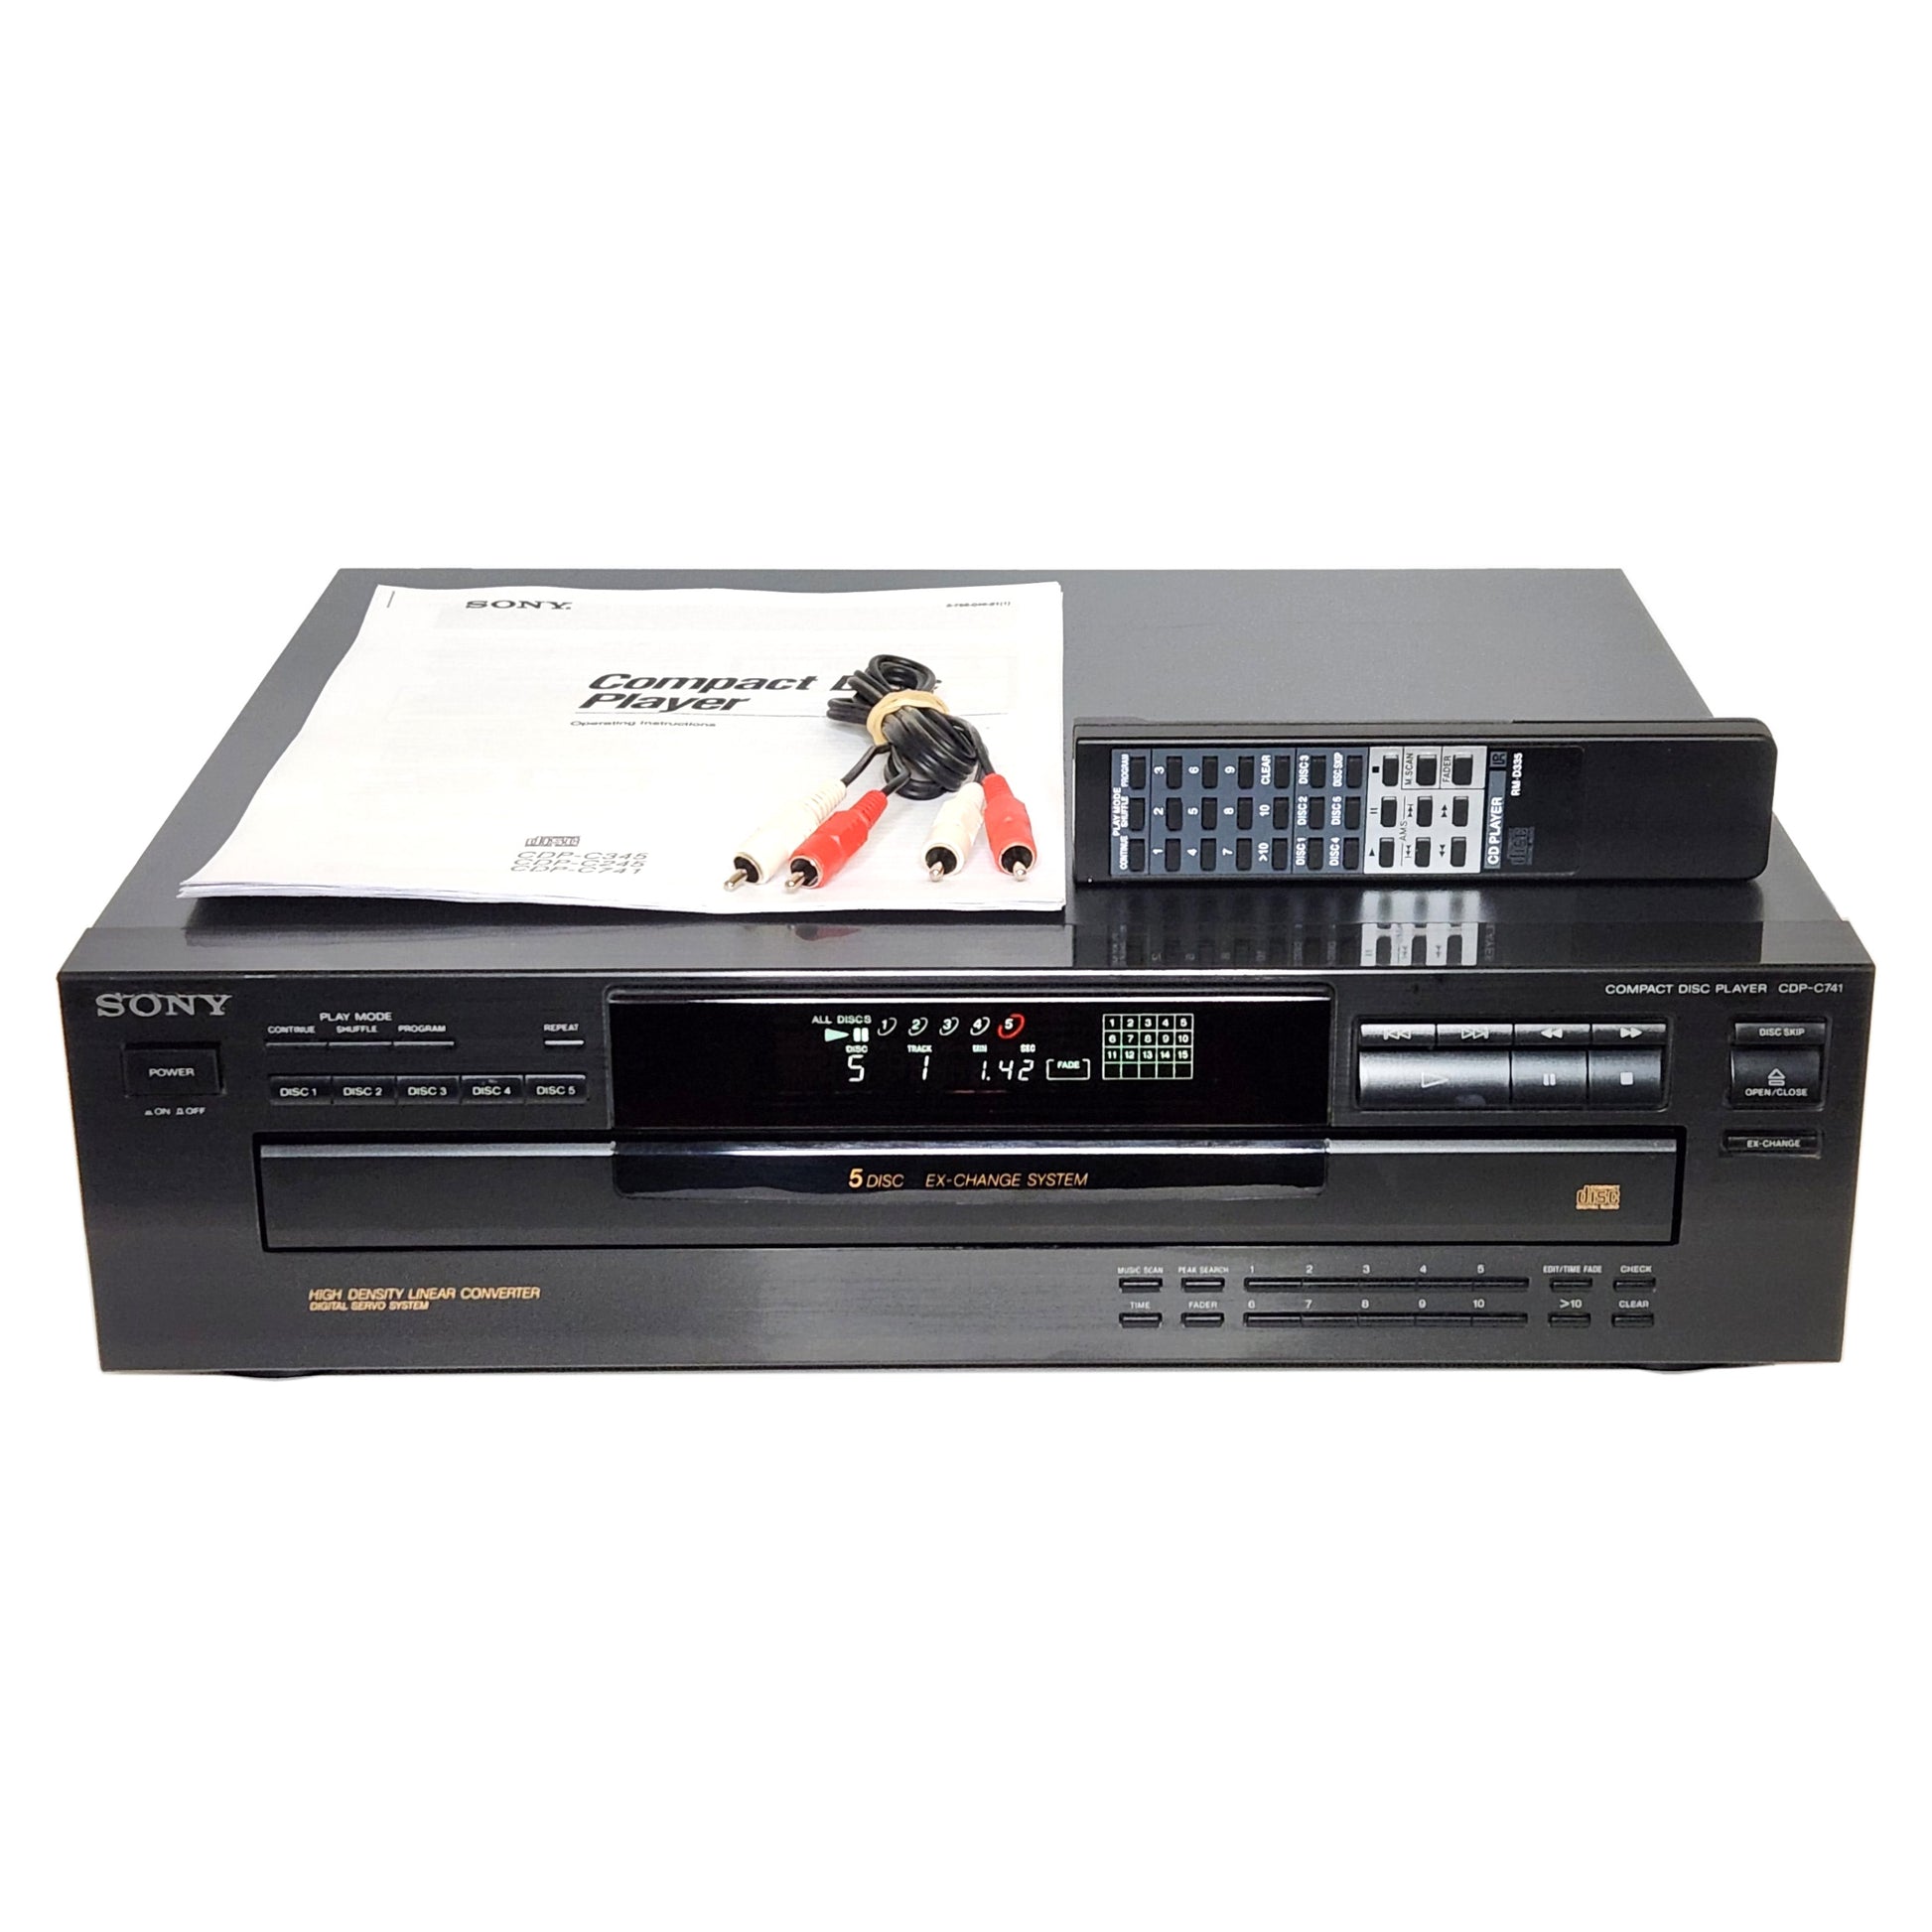 Sony CDP-C741 5-Disc Carousel CD Changer